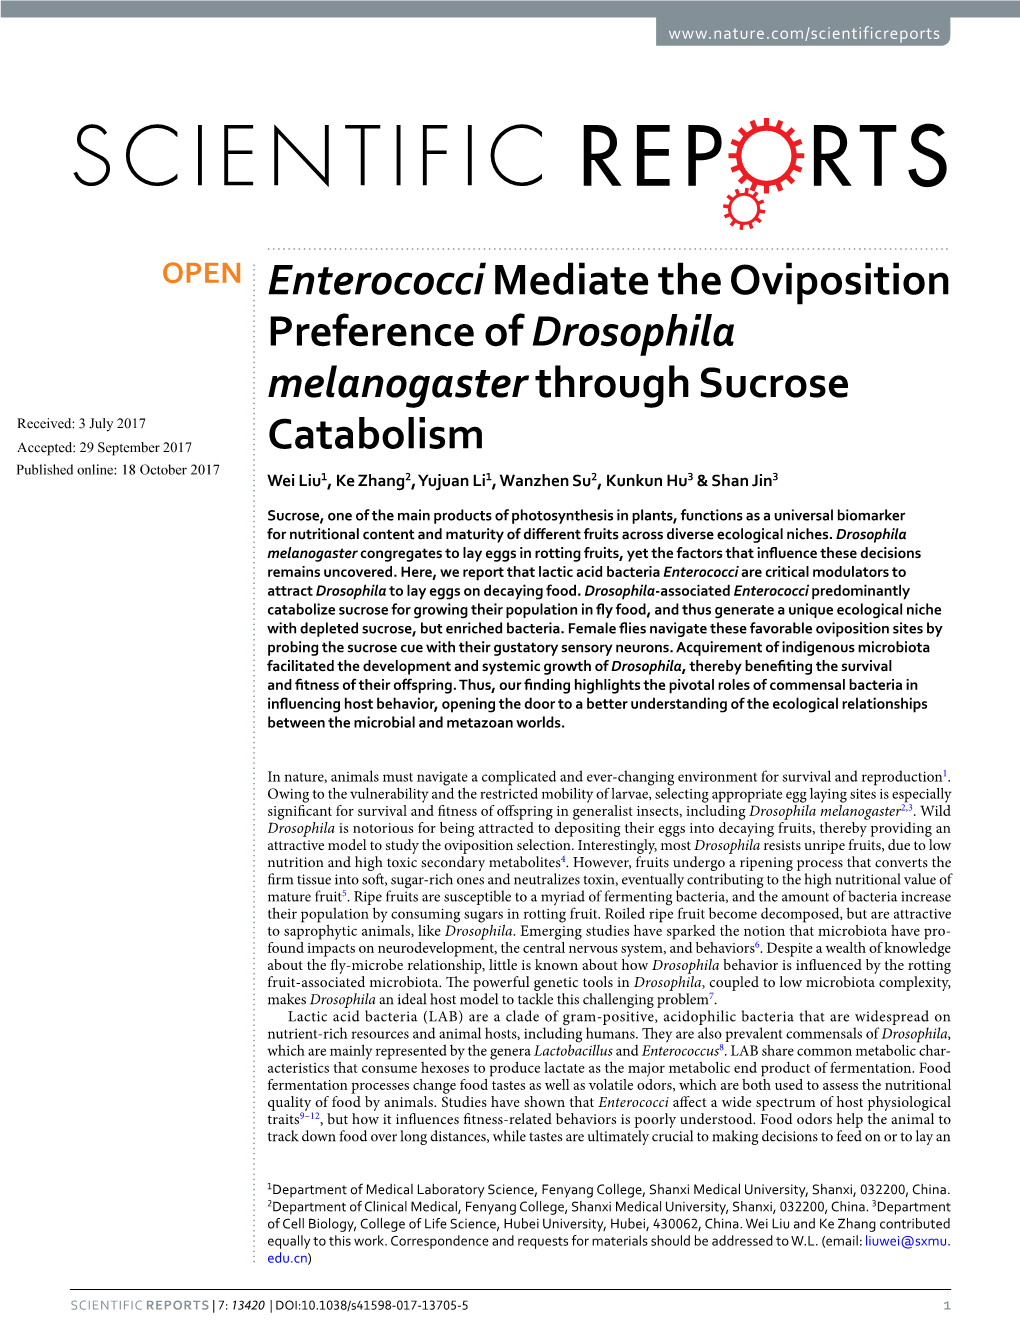 Enterococci Mediate the Oviposition Preference of Drosophila